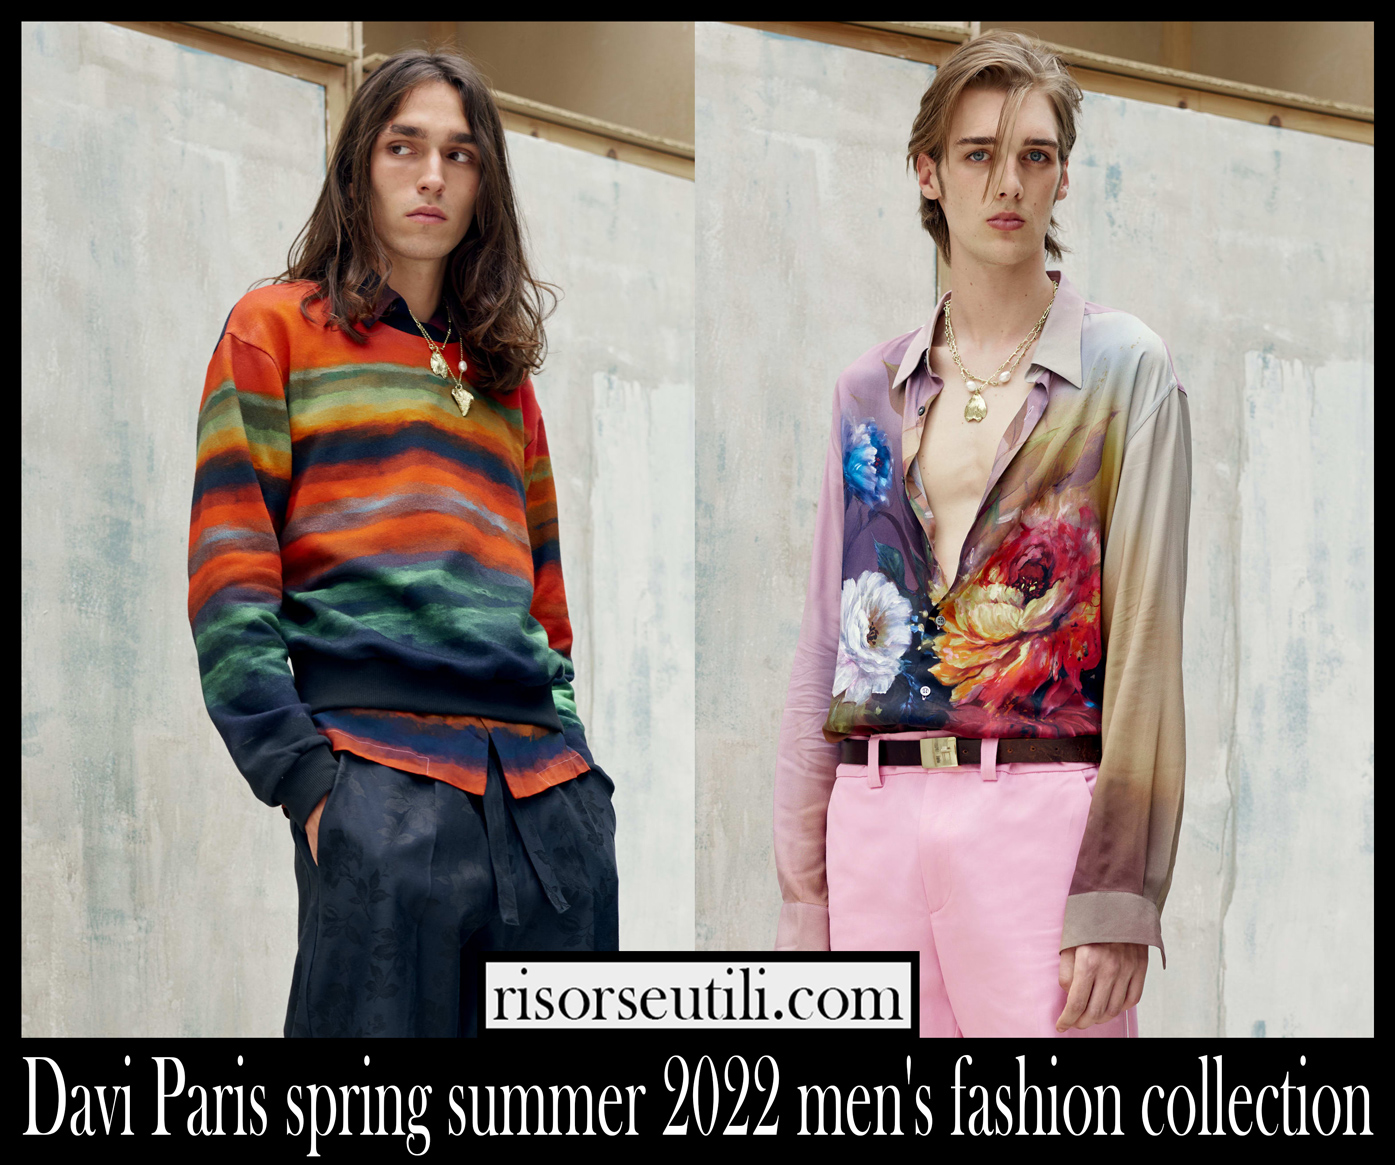 Davi Paris spring summer 2022 men's fashion collection